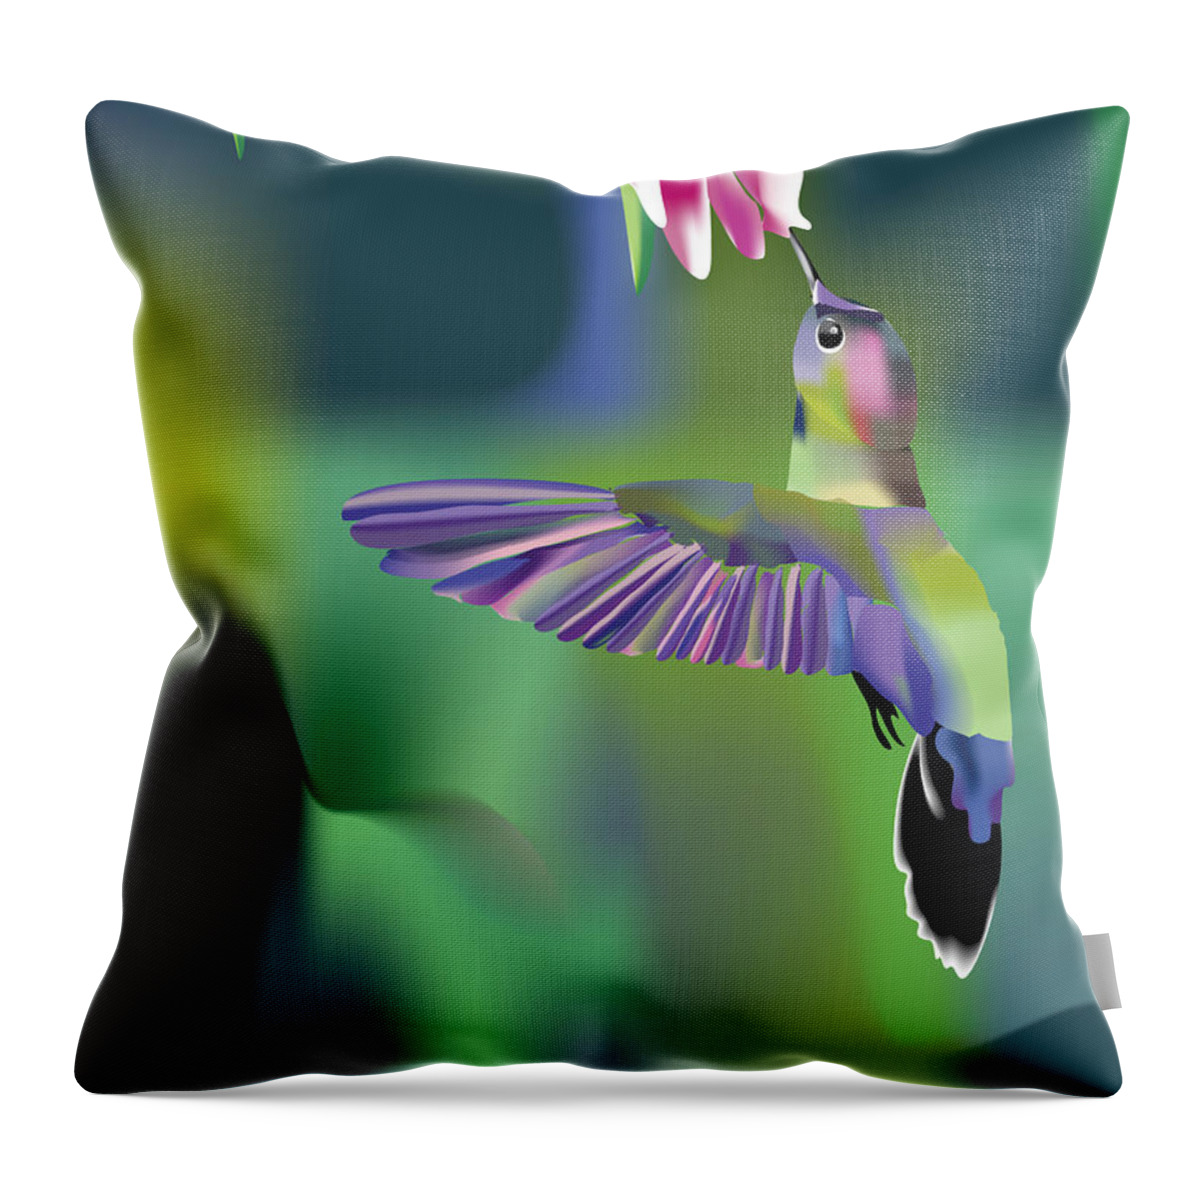 Hummingbird Throw Pillow featuring the digital art Hummingbird by Arline Wagner